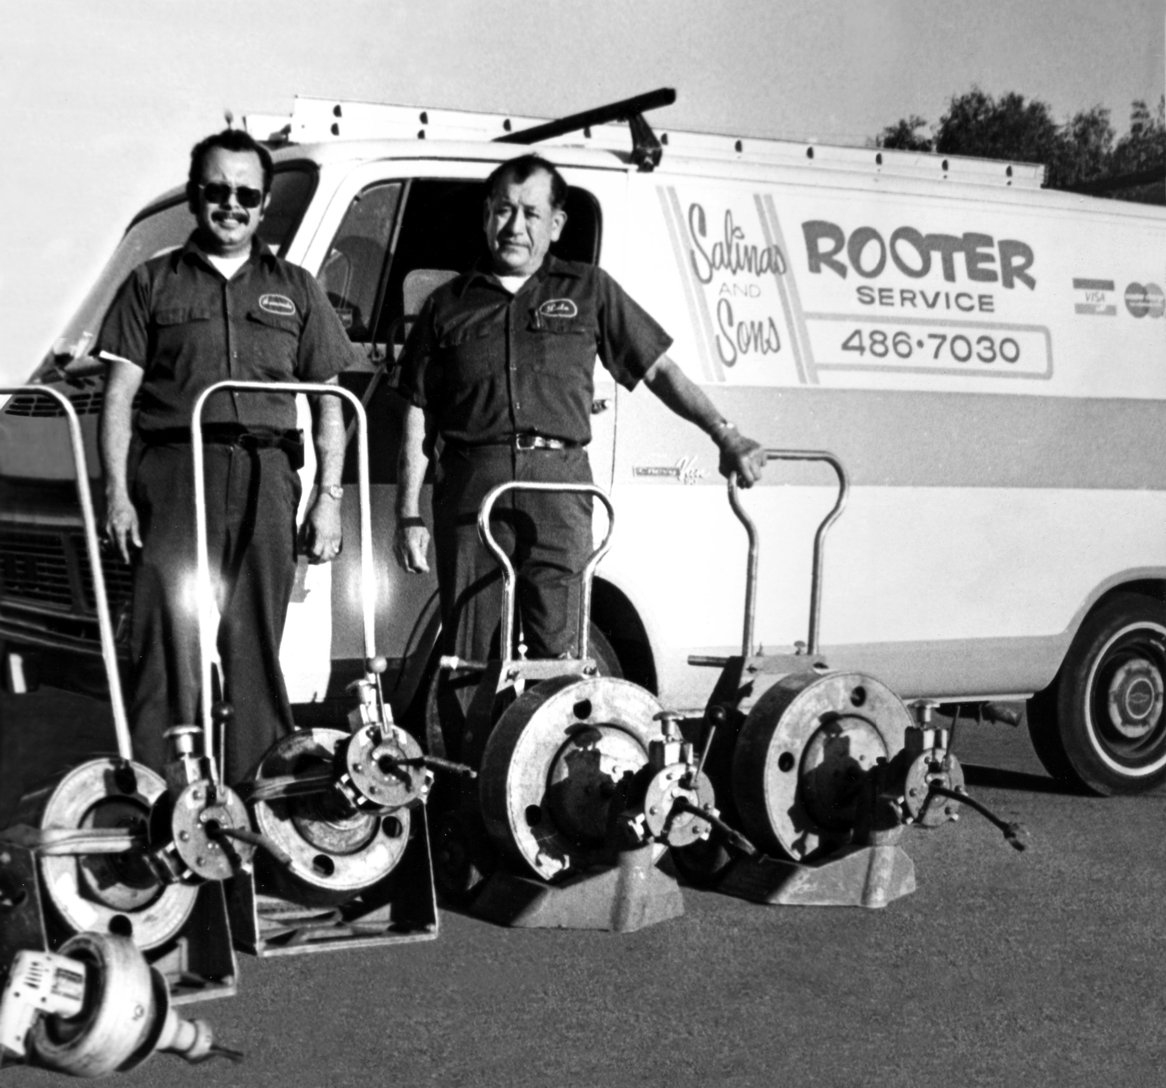 Salinas Rooter 1977